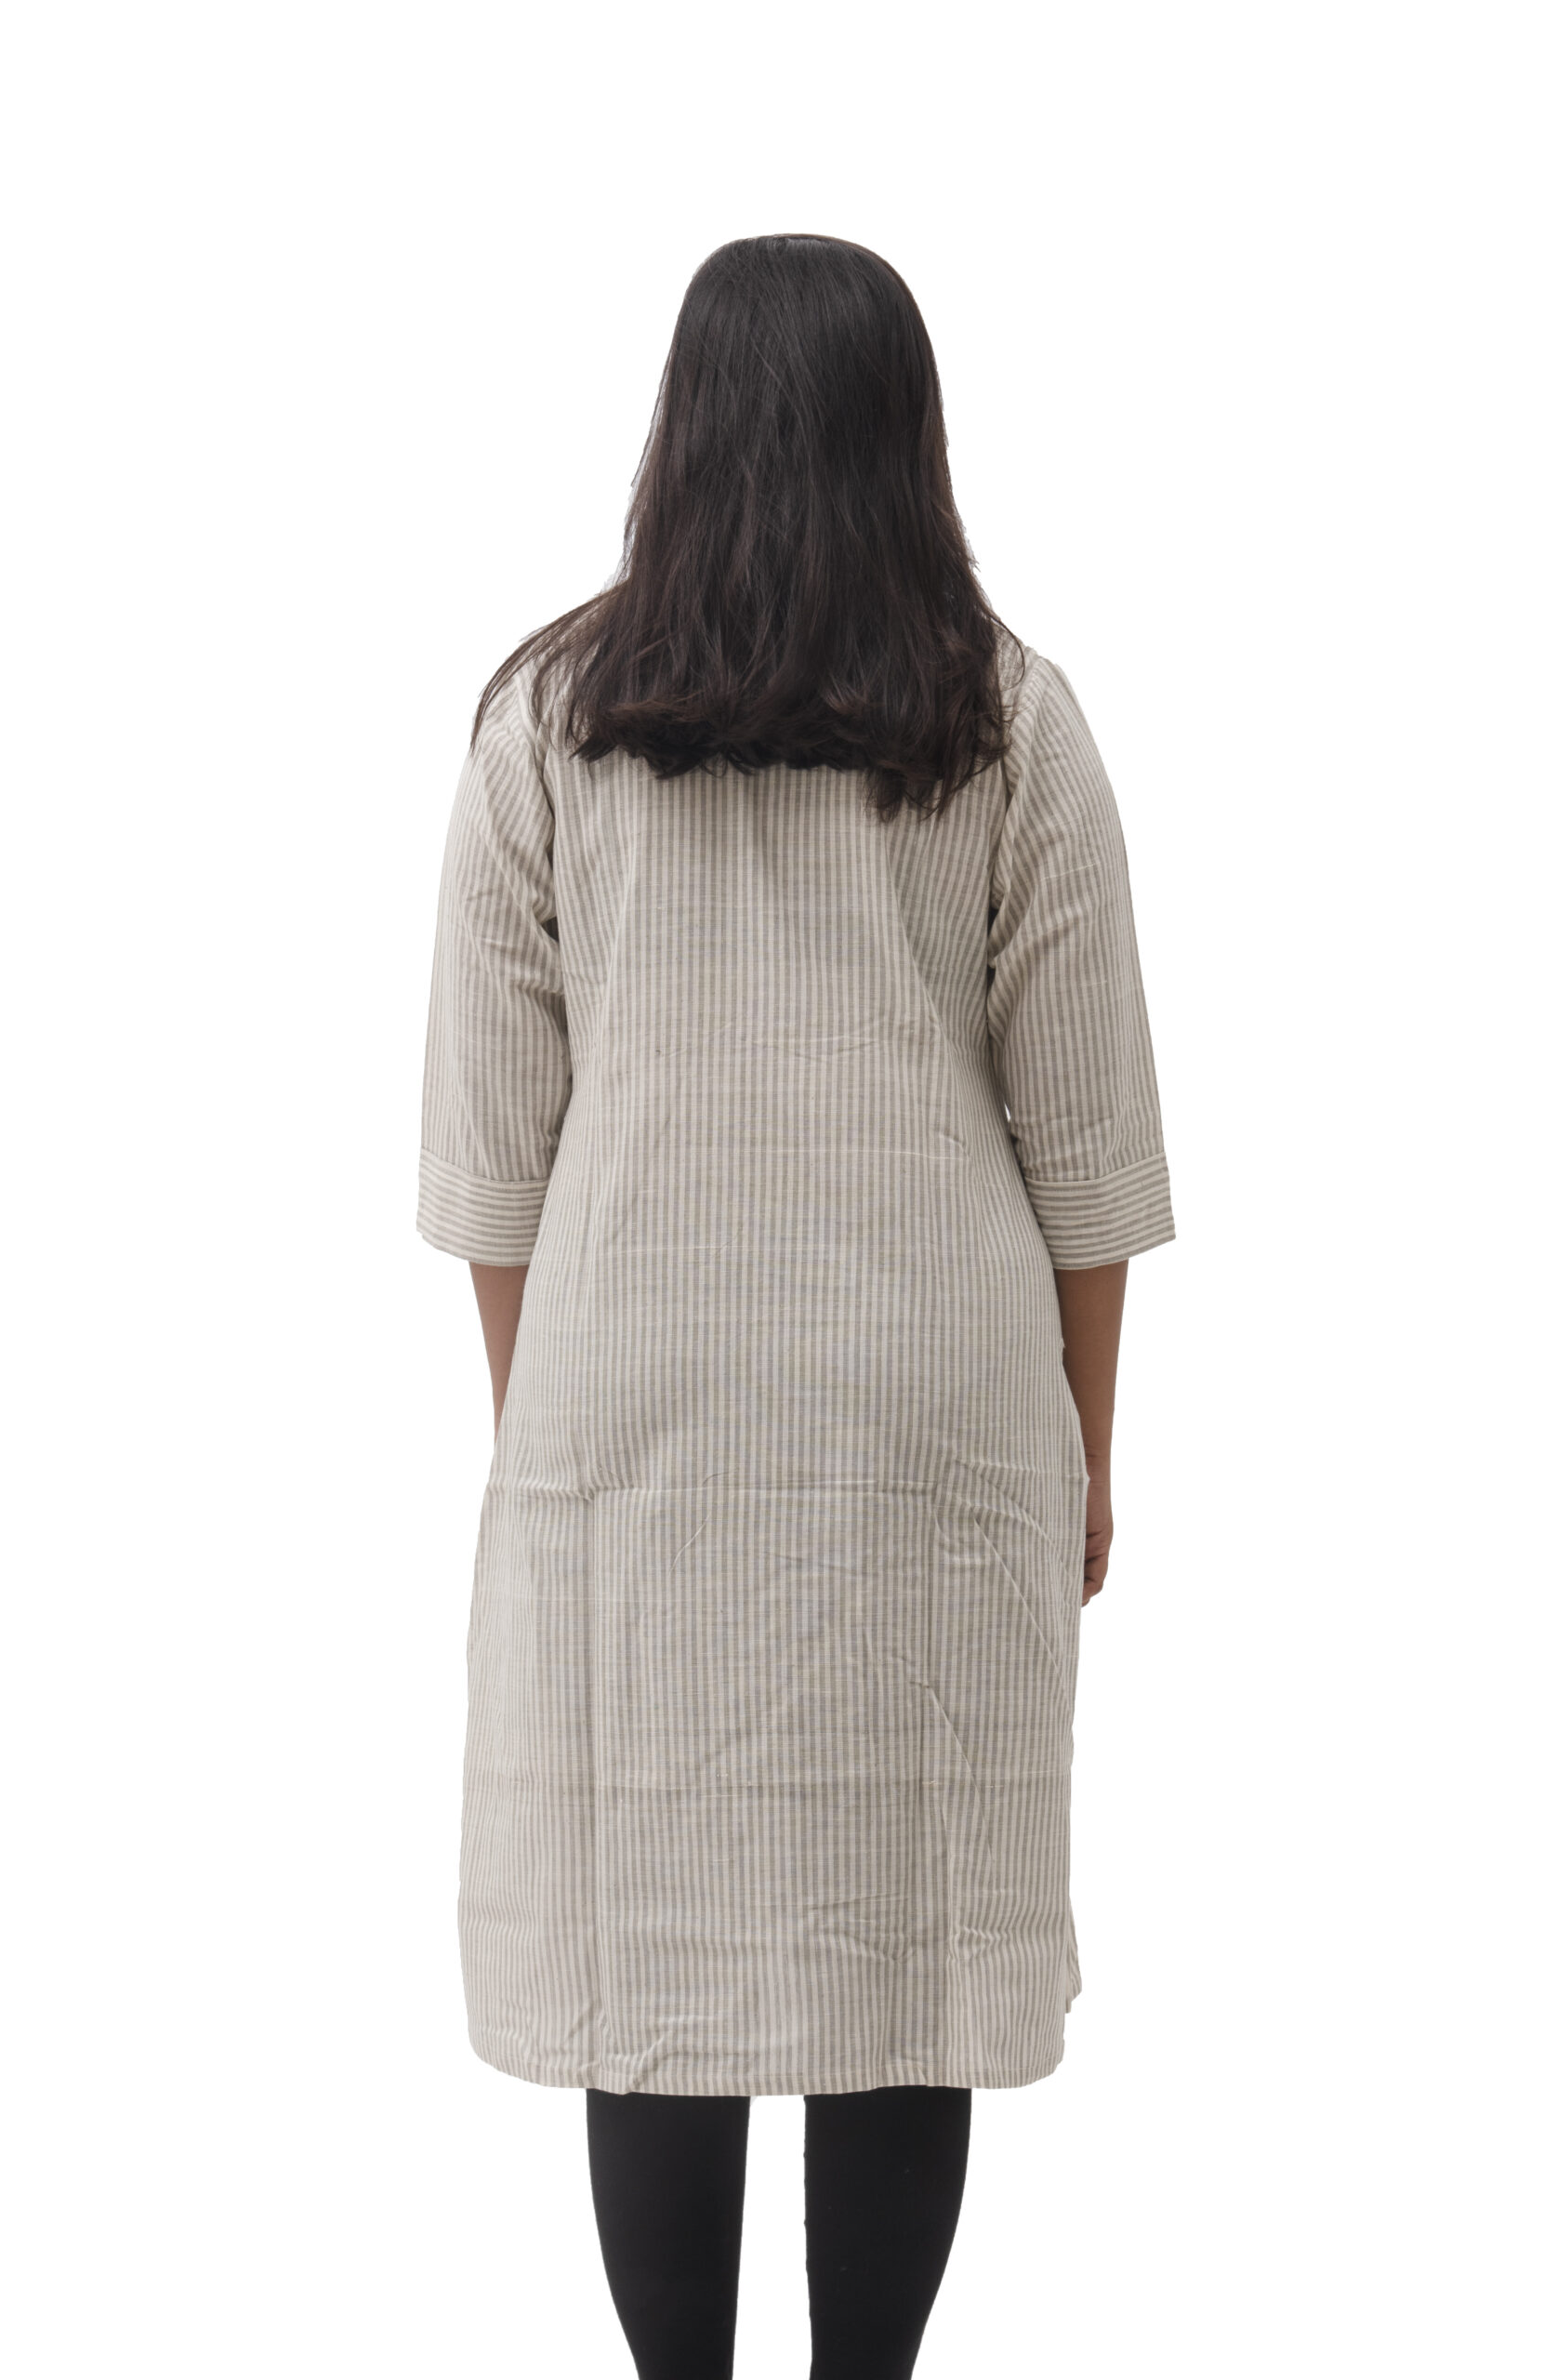 Khadi Cotton Women Kurtis with Striped Pattern